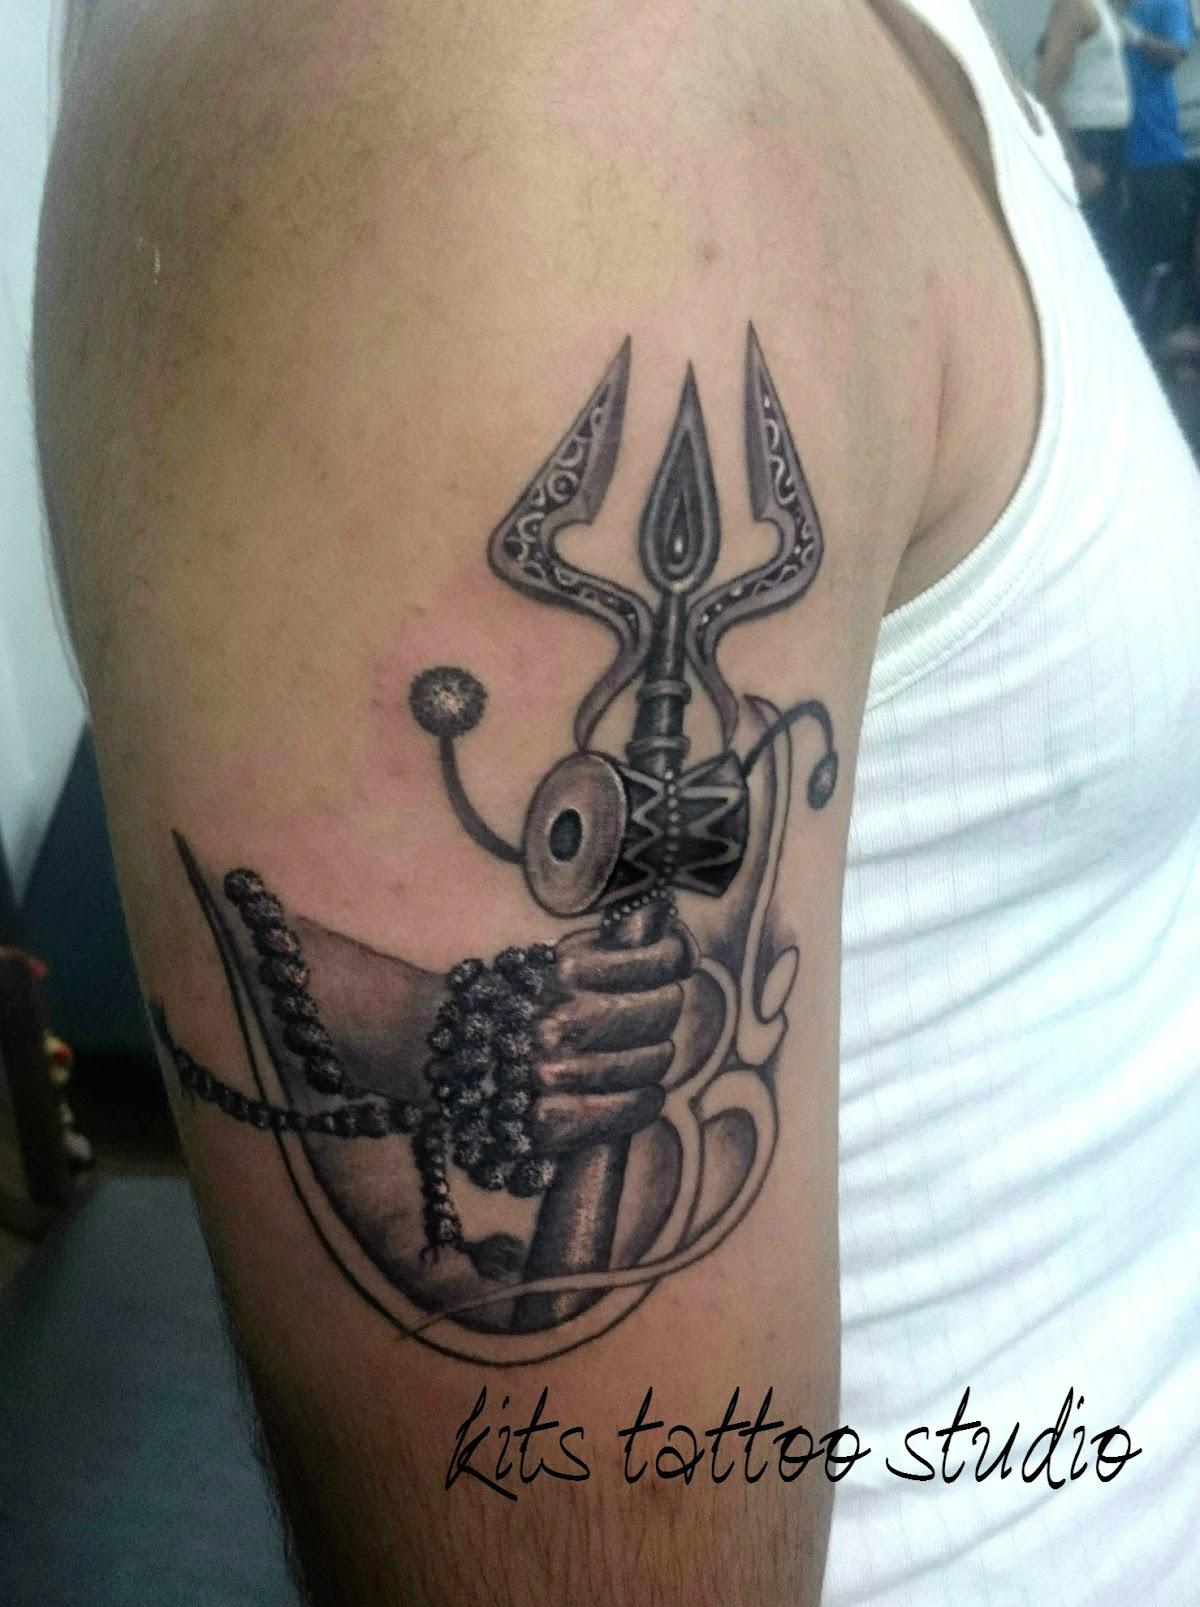 jharsuguda tattoo ink🧿 on Instagram: 